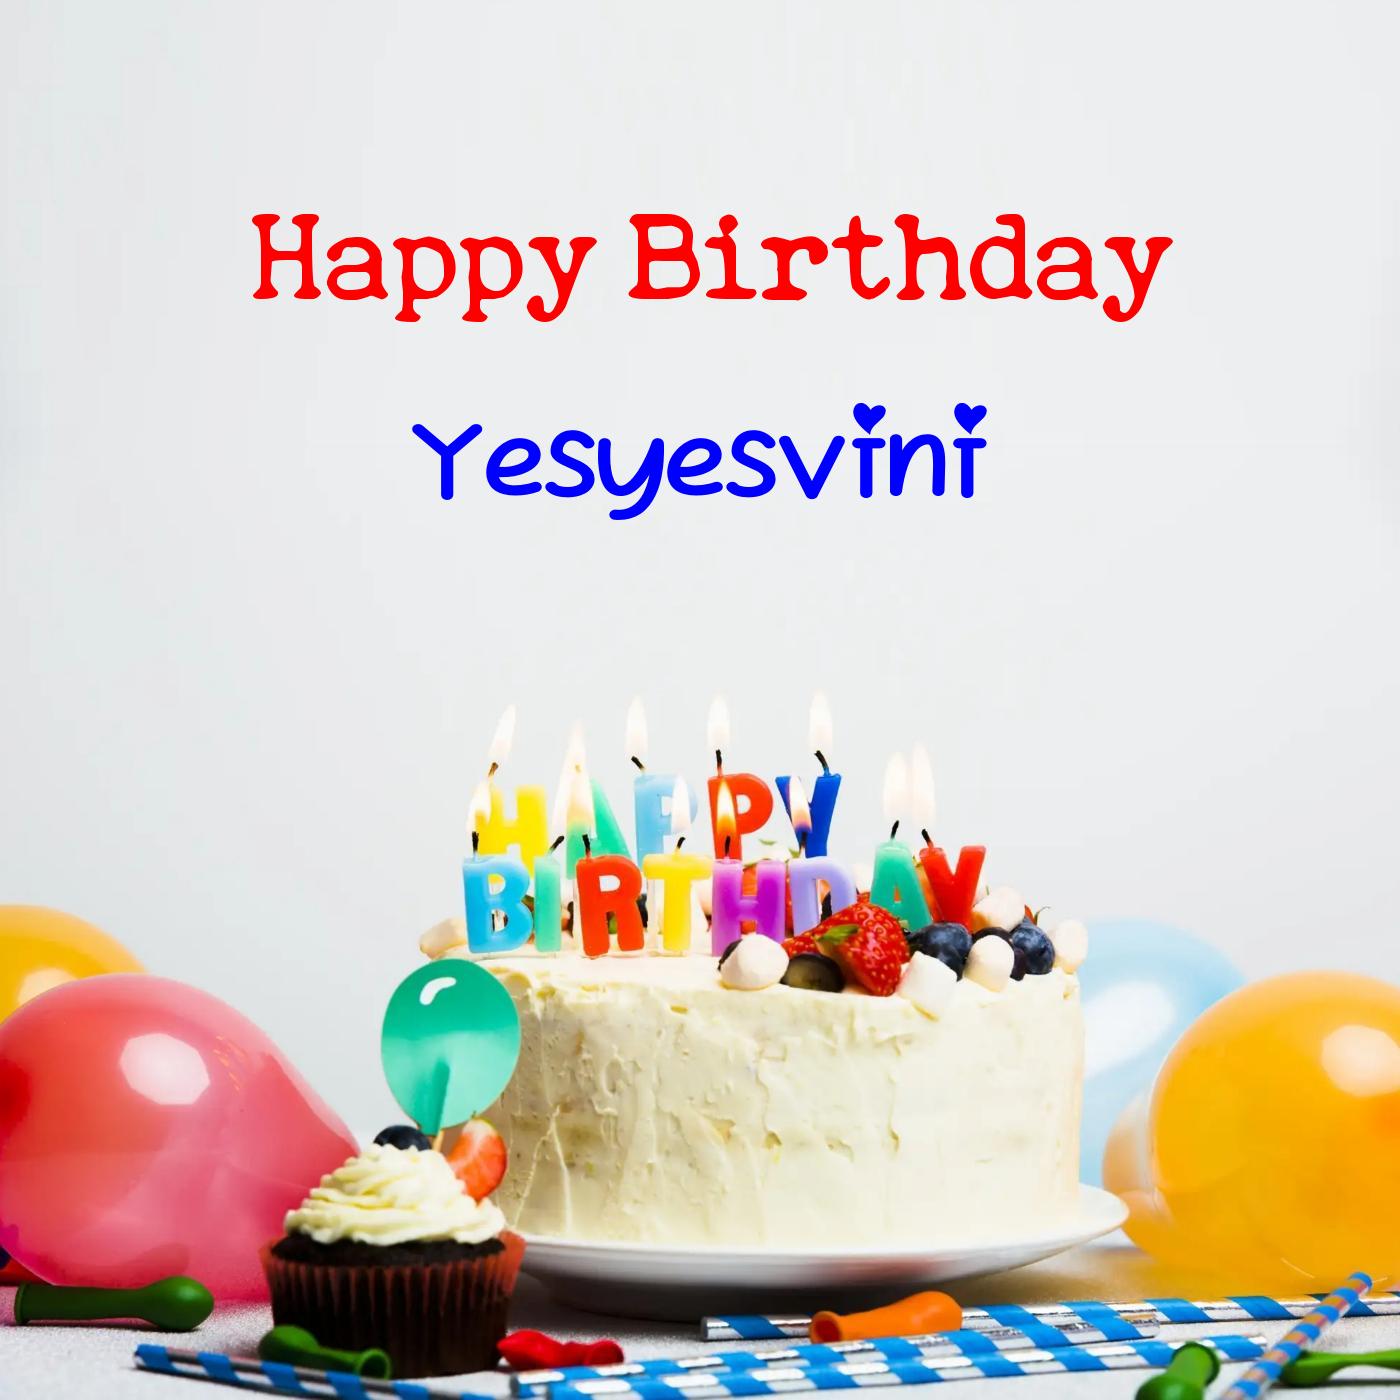 Happy Birthday Yesyesvini Cake Balloons Card